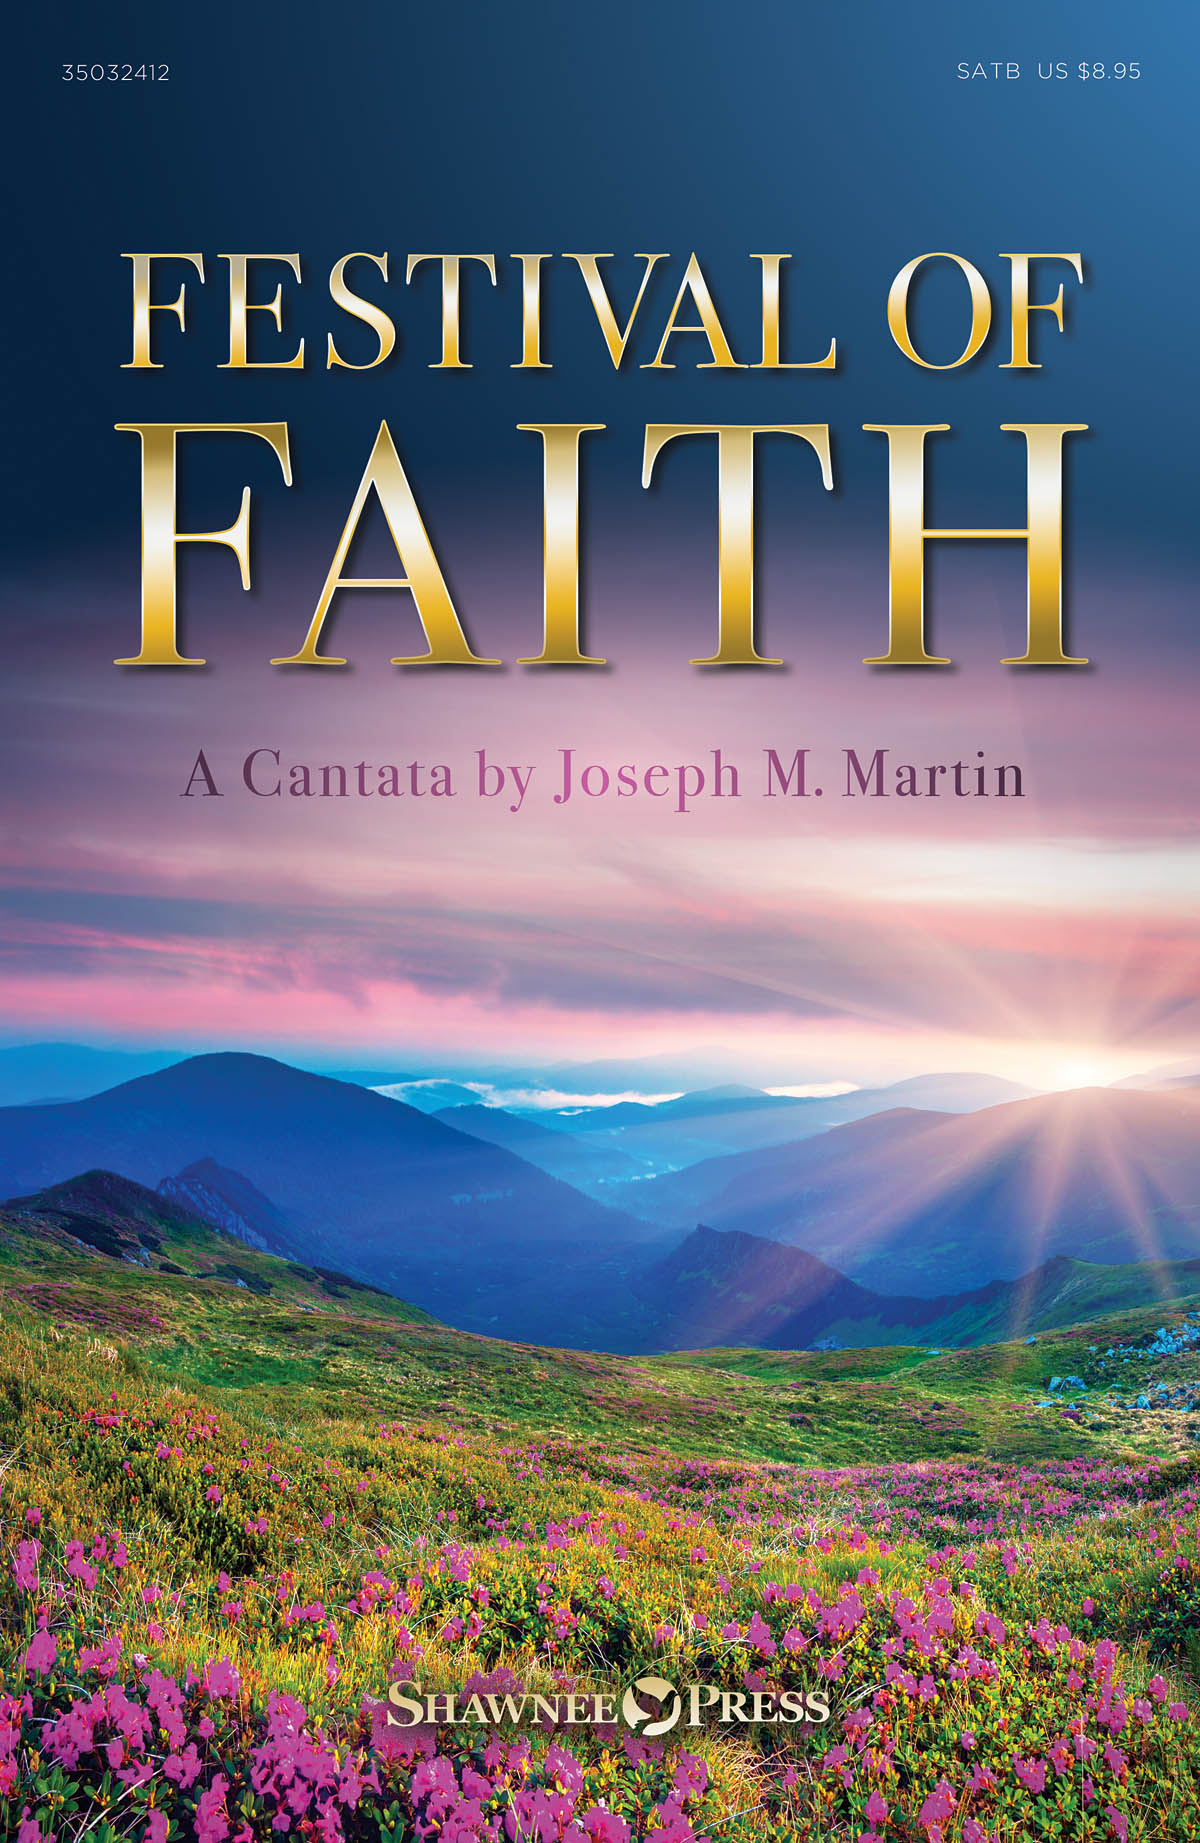 Festival Of Faith (MARTIN JOSEPH M)